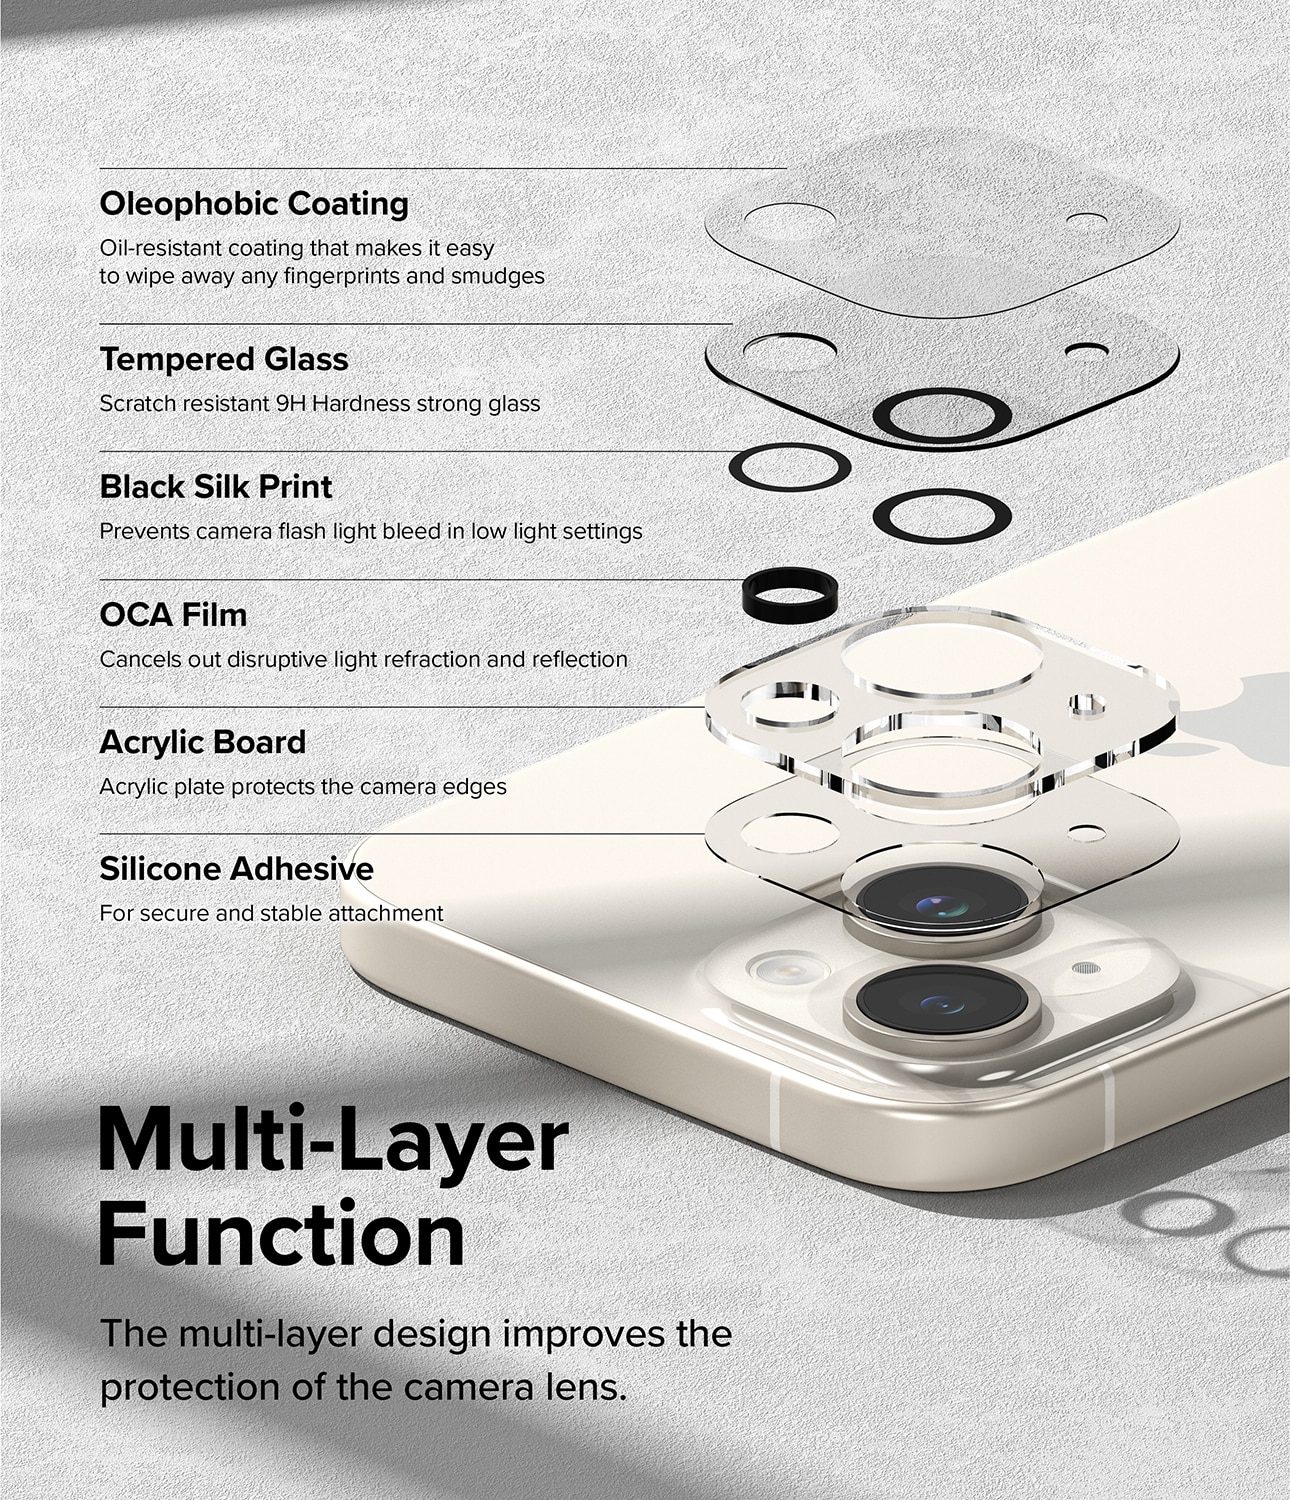 Camera Protector Glass (2 pièces) iPhone 15 Plus Transparent